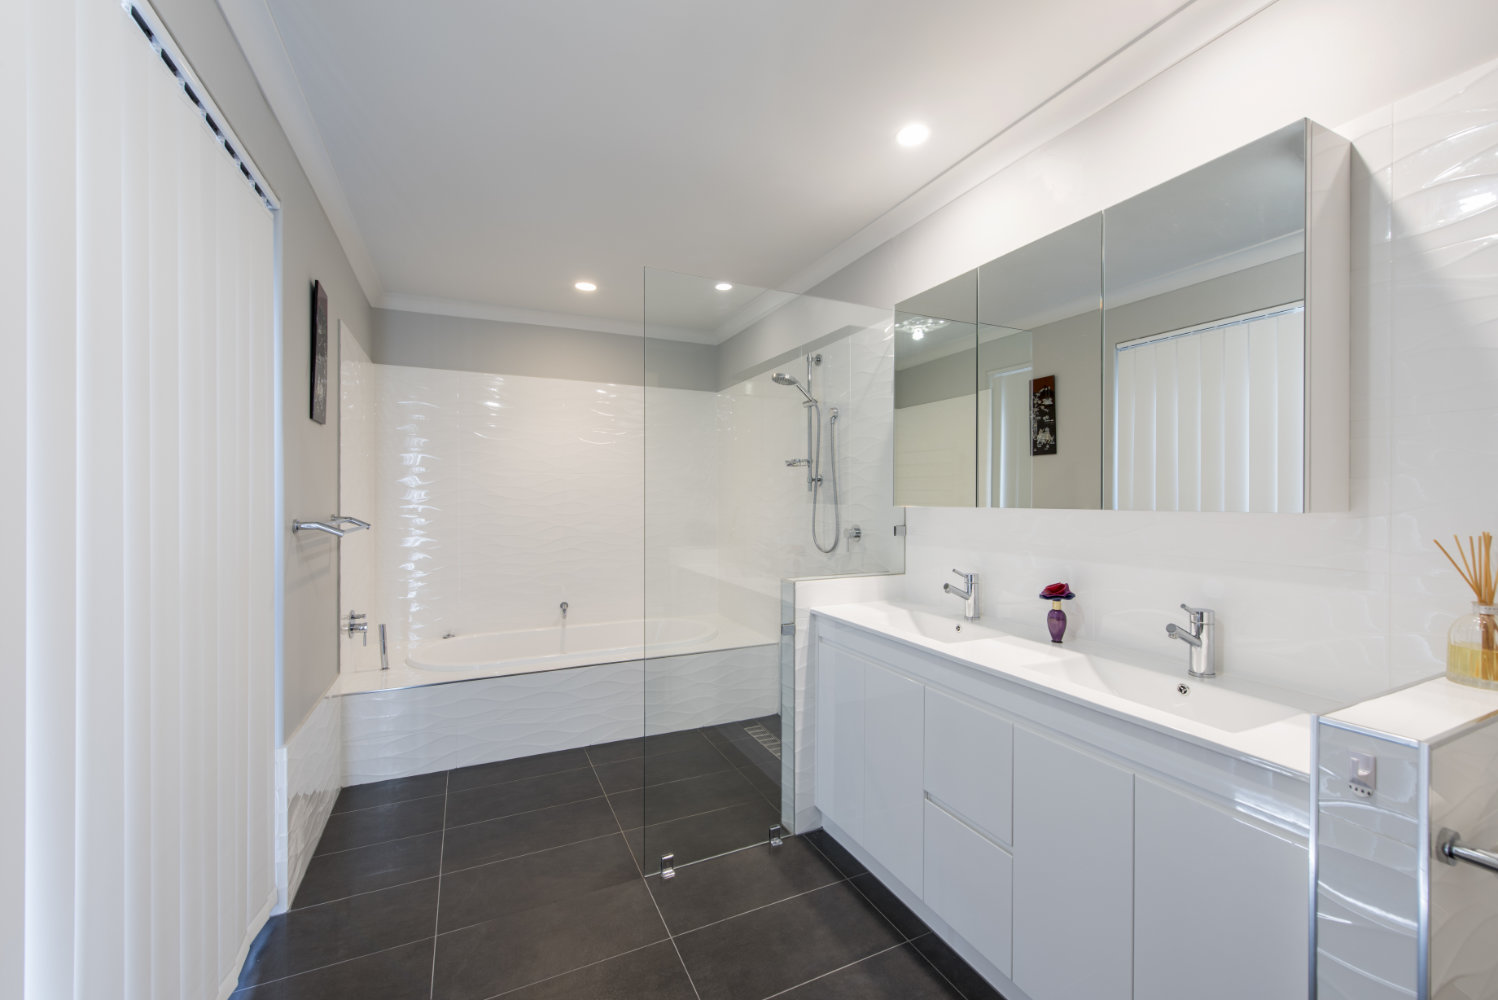 Bathroom Renovation Bathroom: Bathroom Perth's best renovation ideas and design wa Assett delightful renovation IGRQHVP